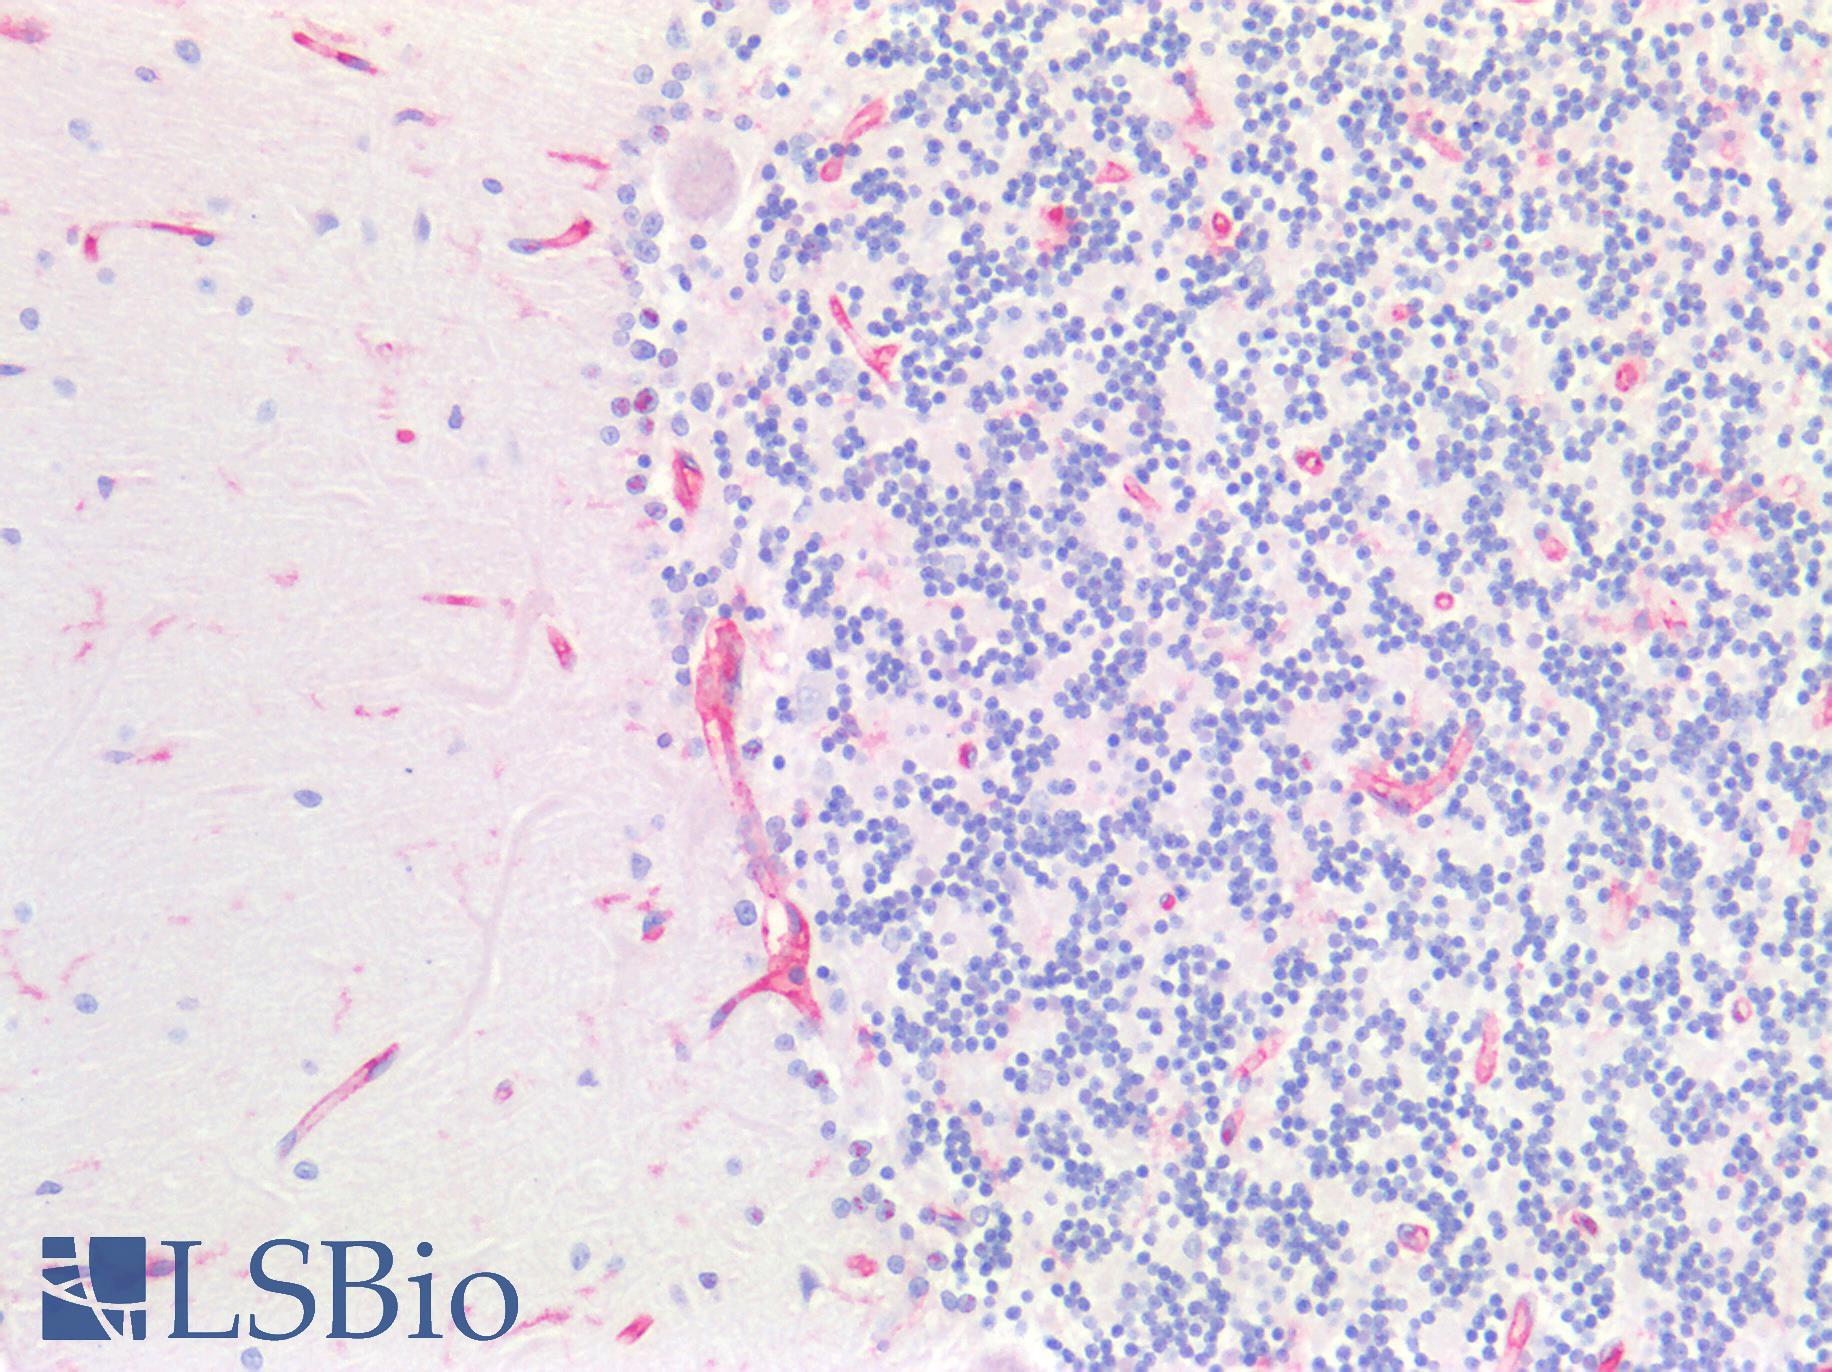 B2M / Beta 2 Microglobulin Antibody - Human Brain, Cerebellum: Formalin-Fixed, Paraffin-Embedded (FFPE)